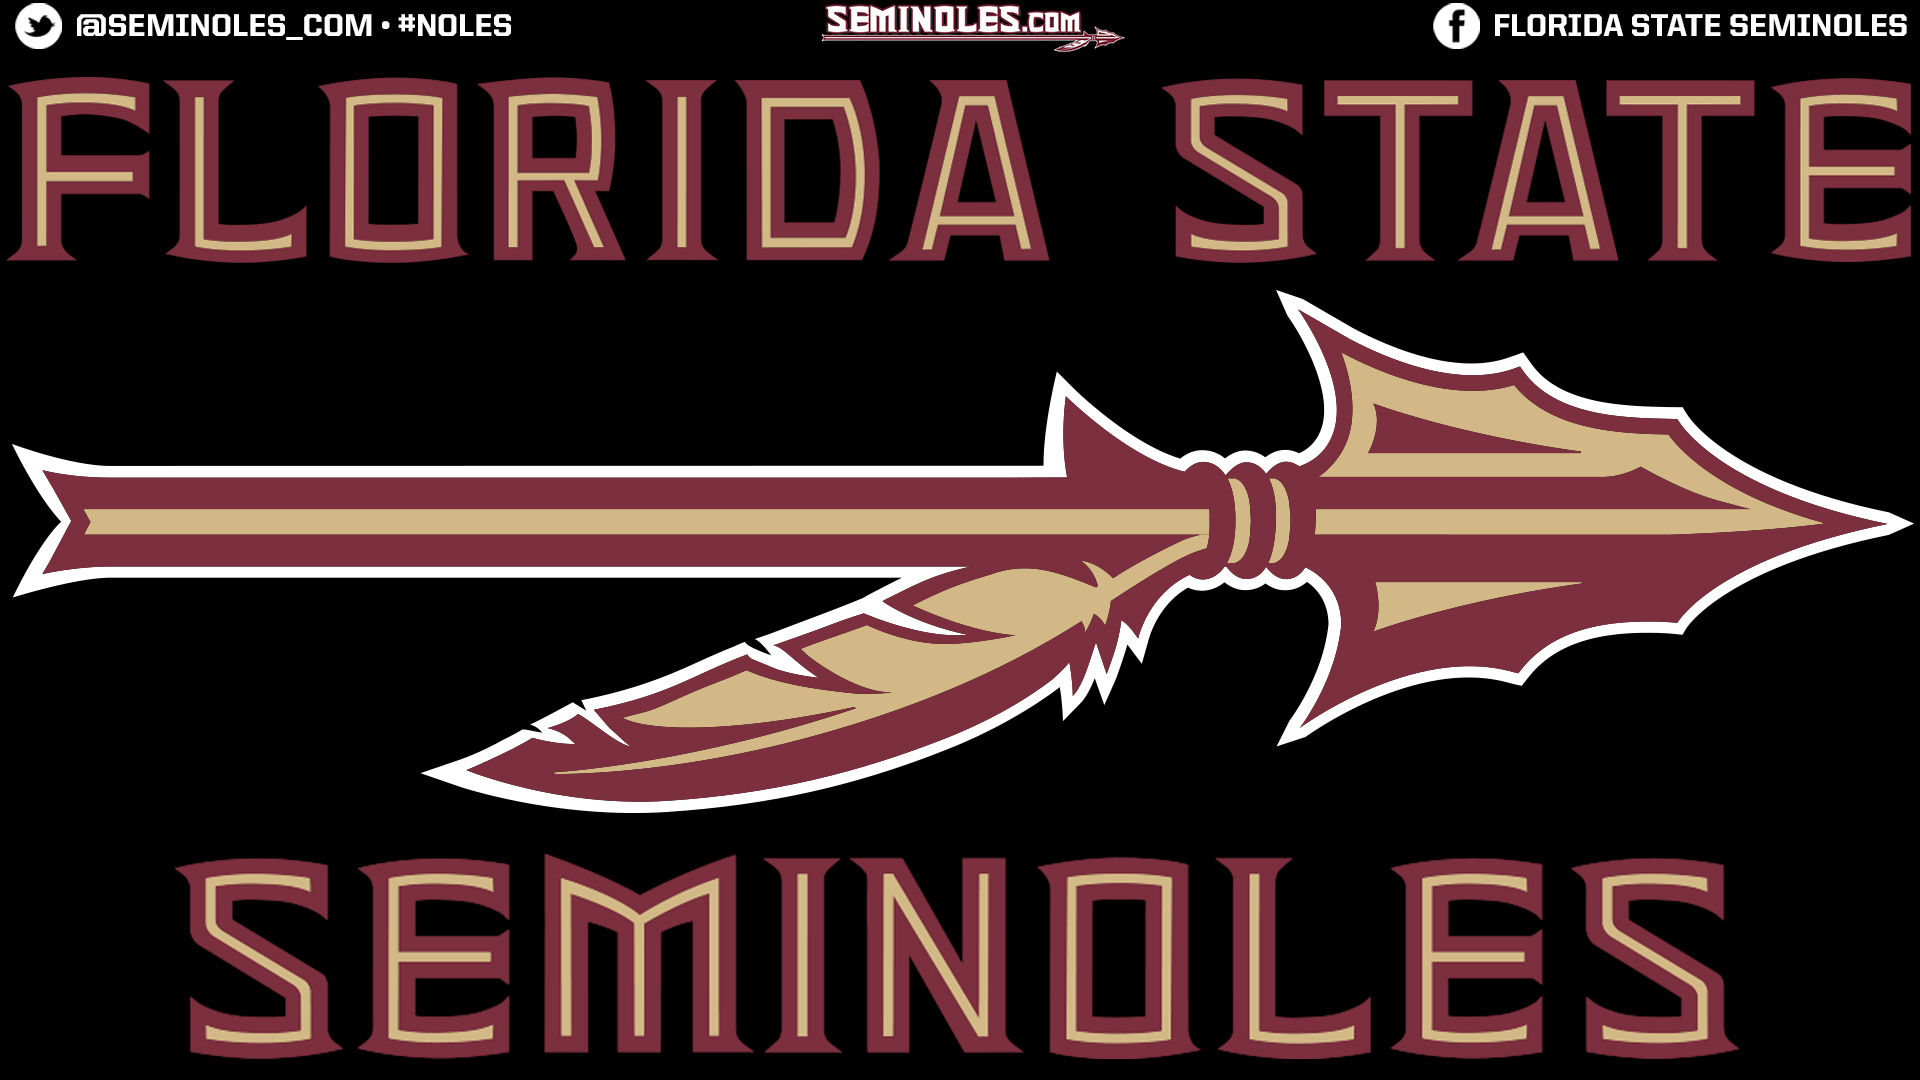 SEMINOLES.COM DESKTOP WALLPAPERS - Florida State Seminoles